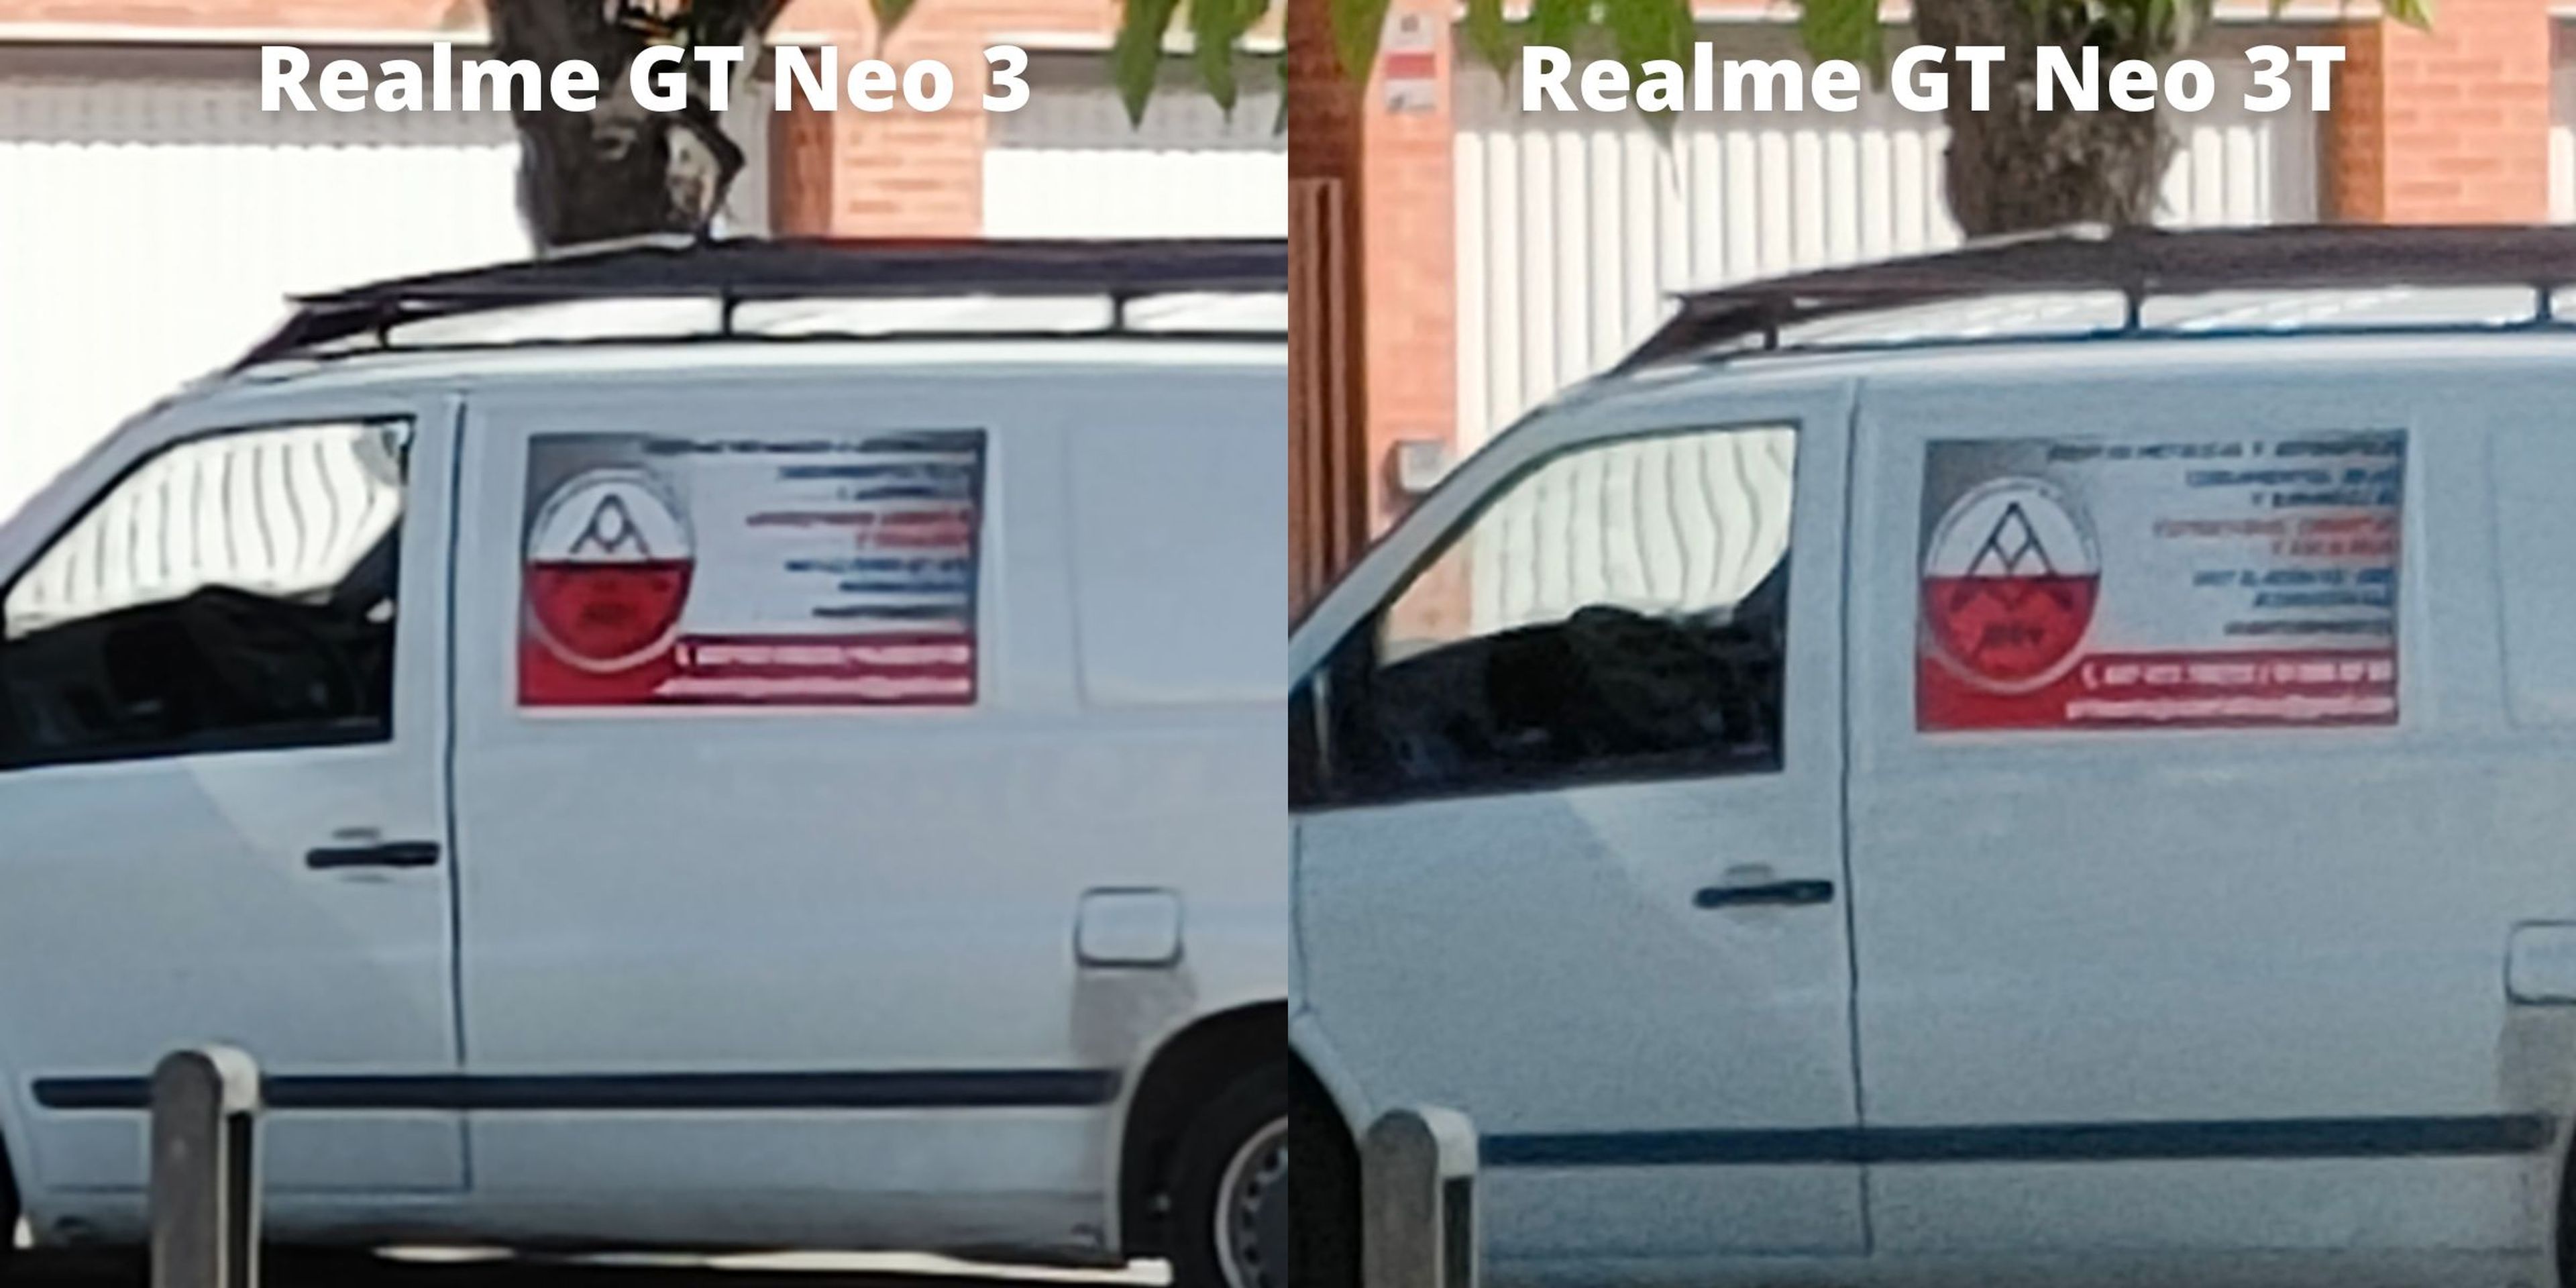 Realme GT Neo 3 vs Realme GT Neo 3T